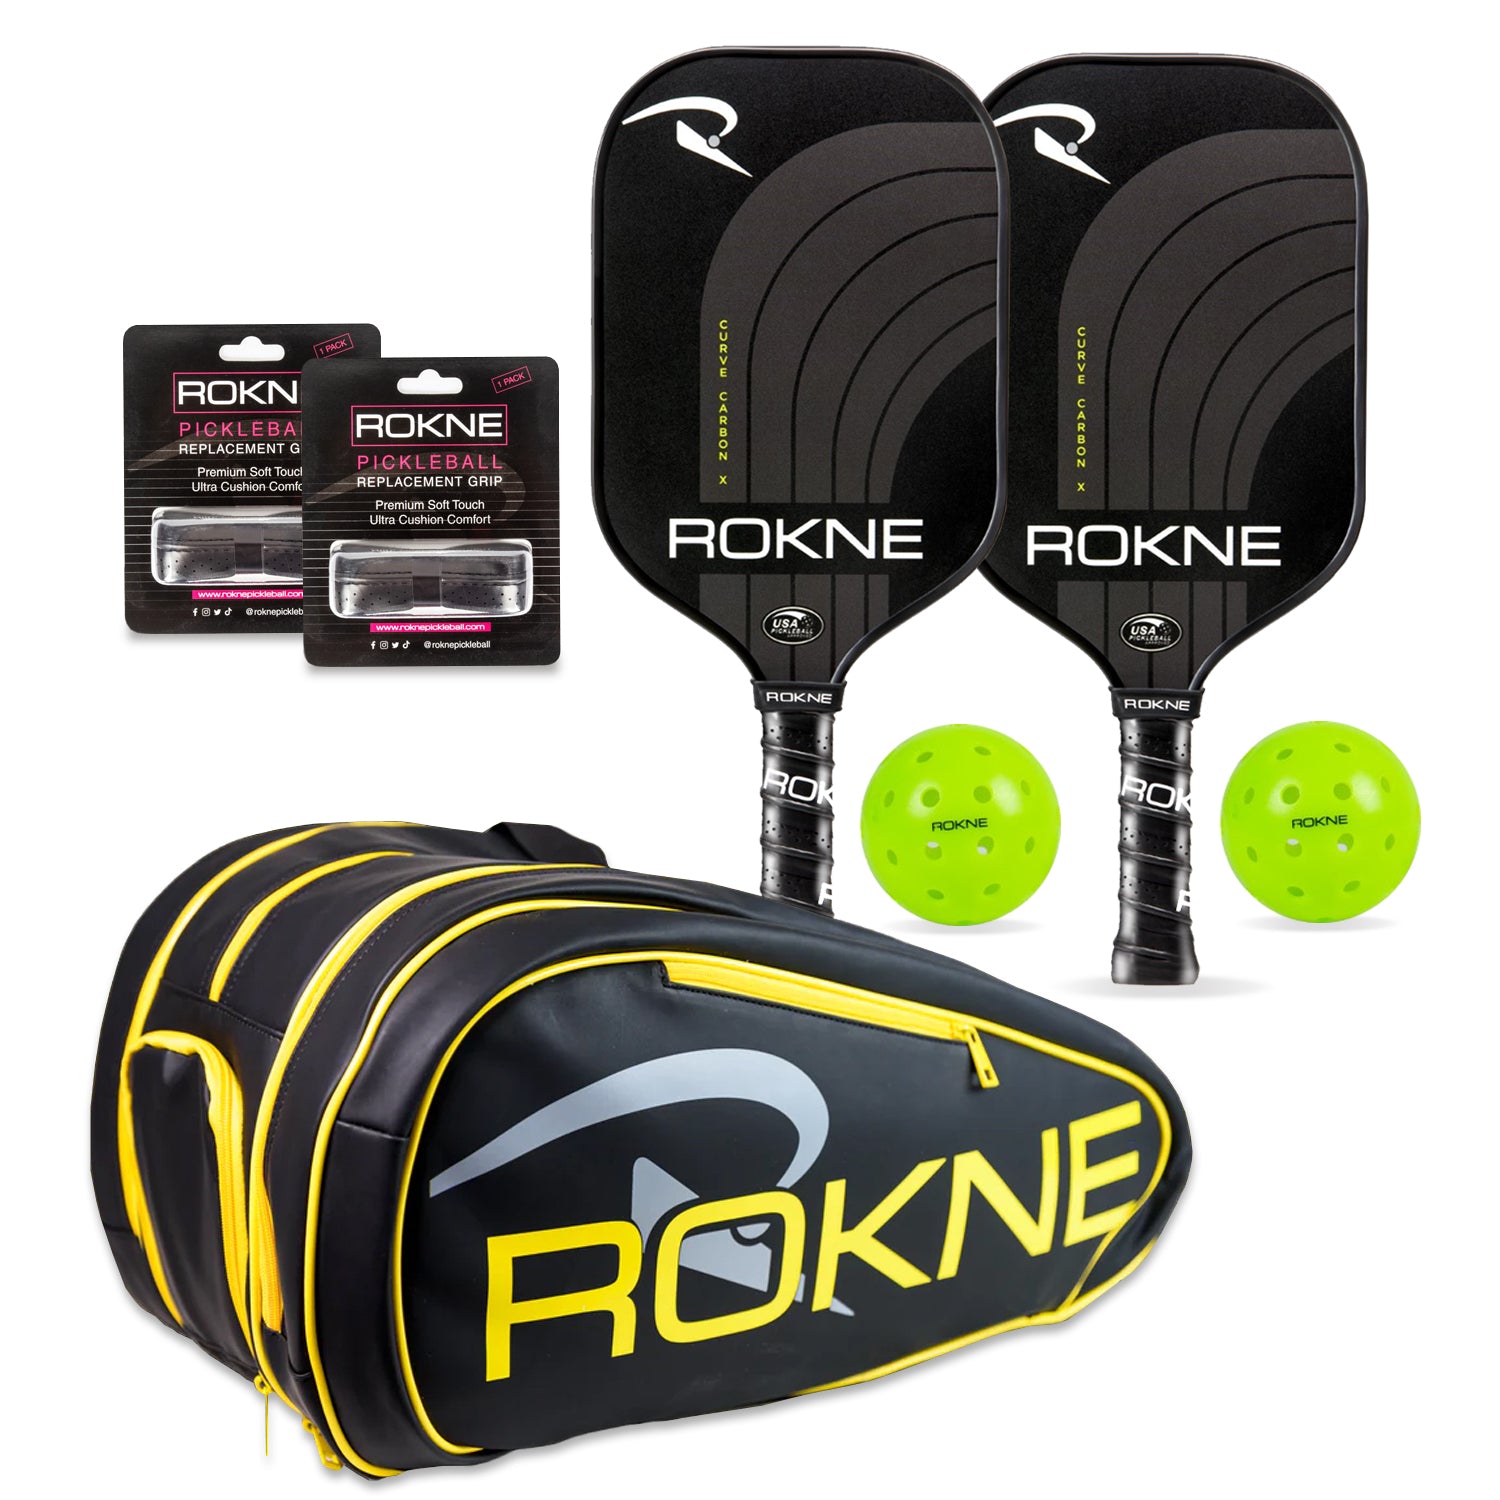 ROKNE Carbon X Pickleball Paddle and Bag Tournament Set